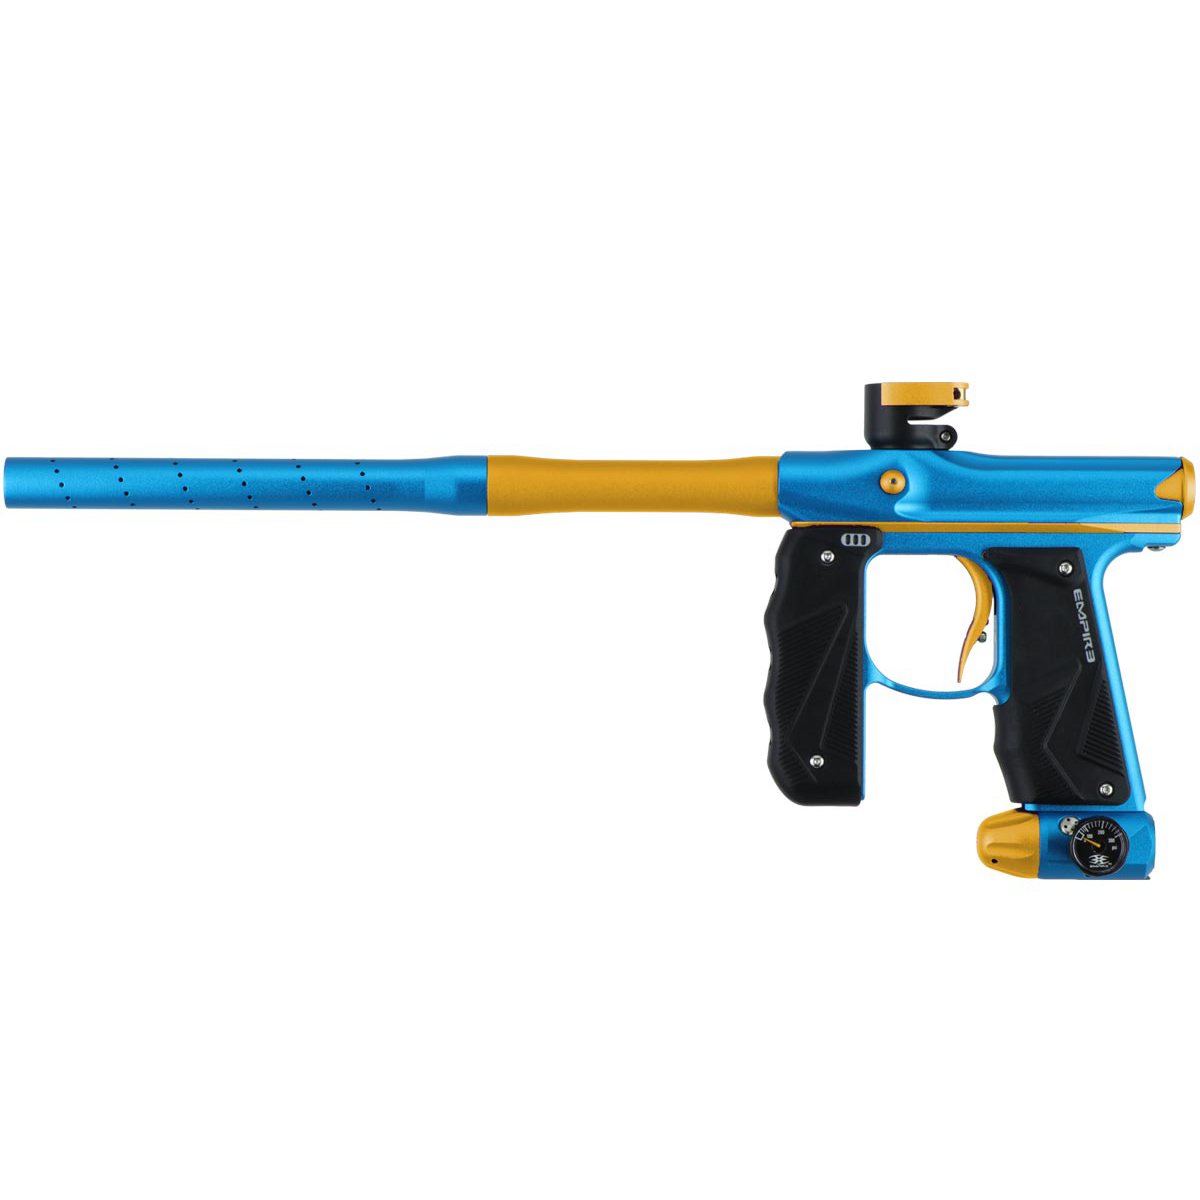 really cool paintball guns